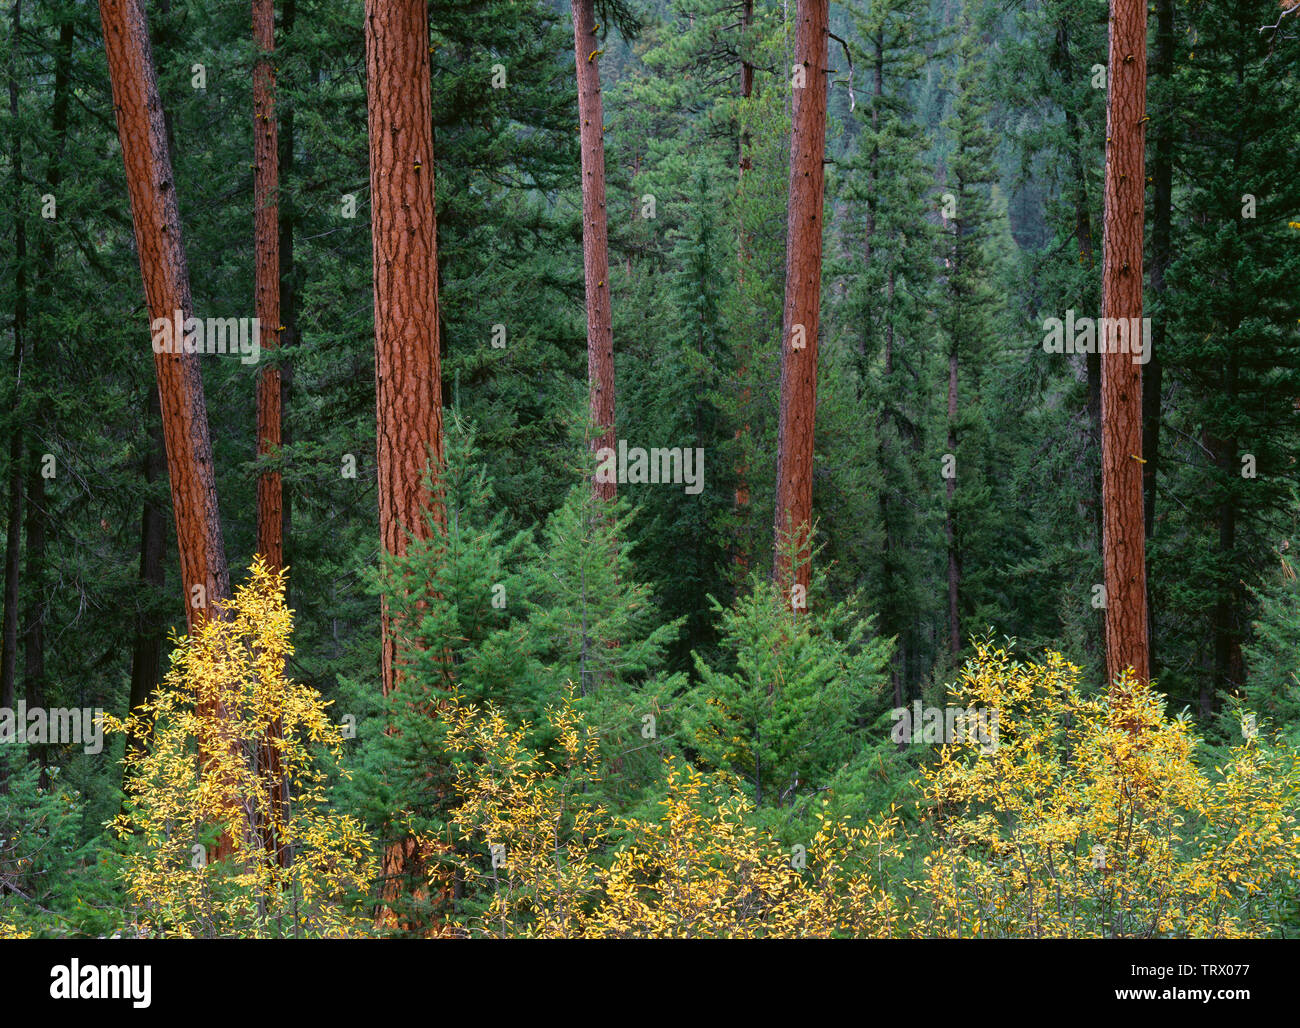 USA, Washington, Okanogan-Wenatchee National Forest, Autumn colored shrubs and small Douglas fir beneath towering Ponderosa pine; Twisp Valley. Stock Photo